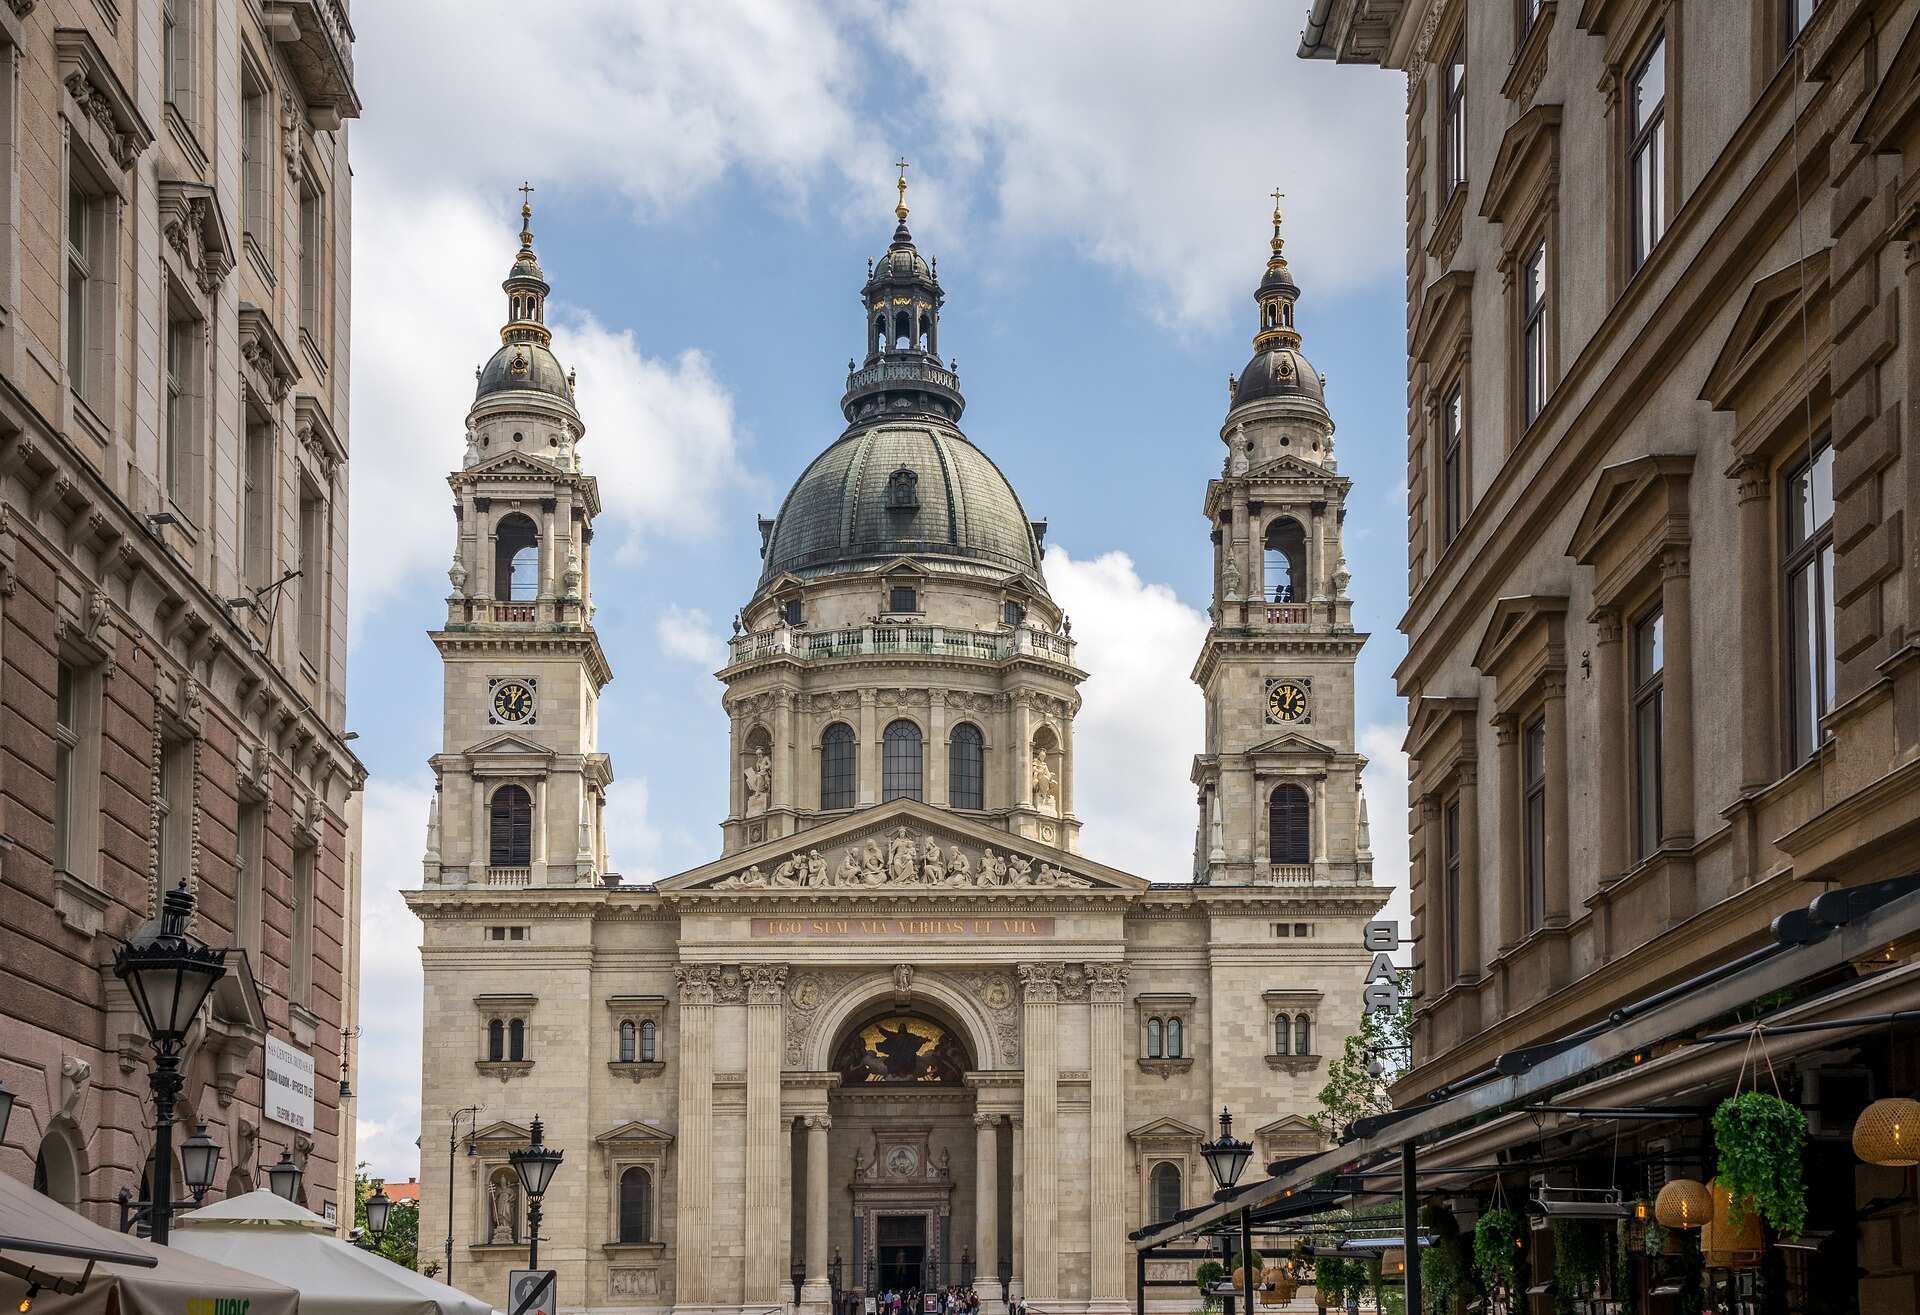 St. Stephen's Basilica, Budapest tourist destinations